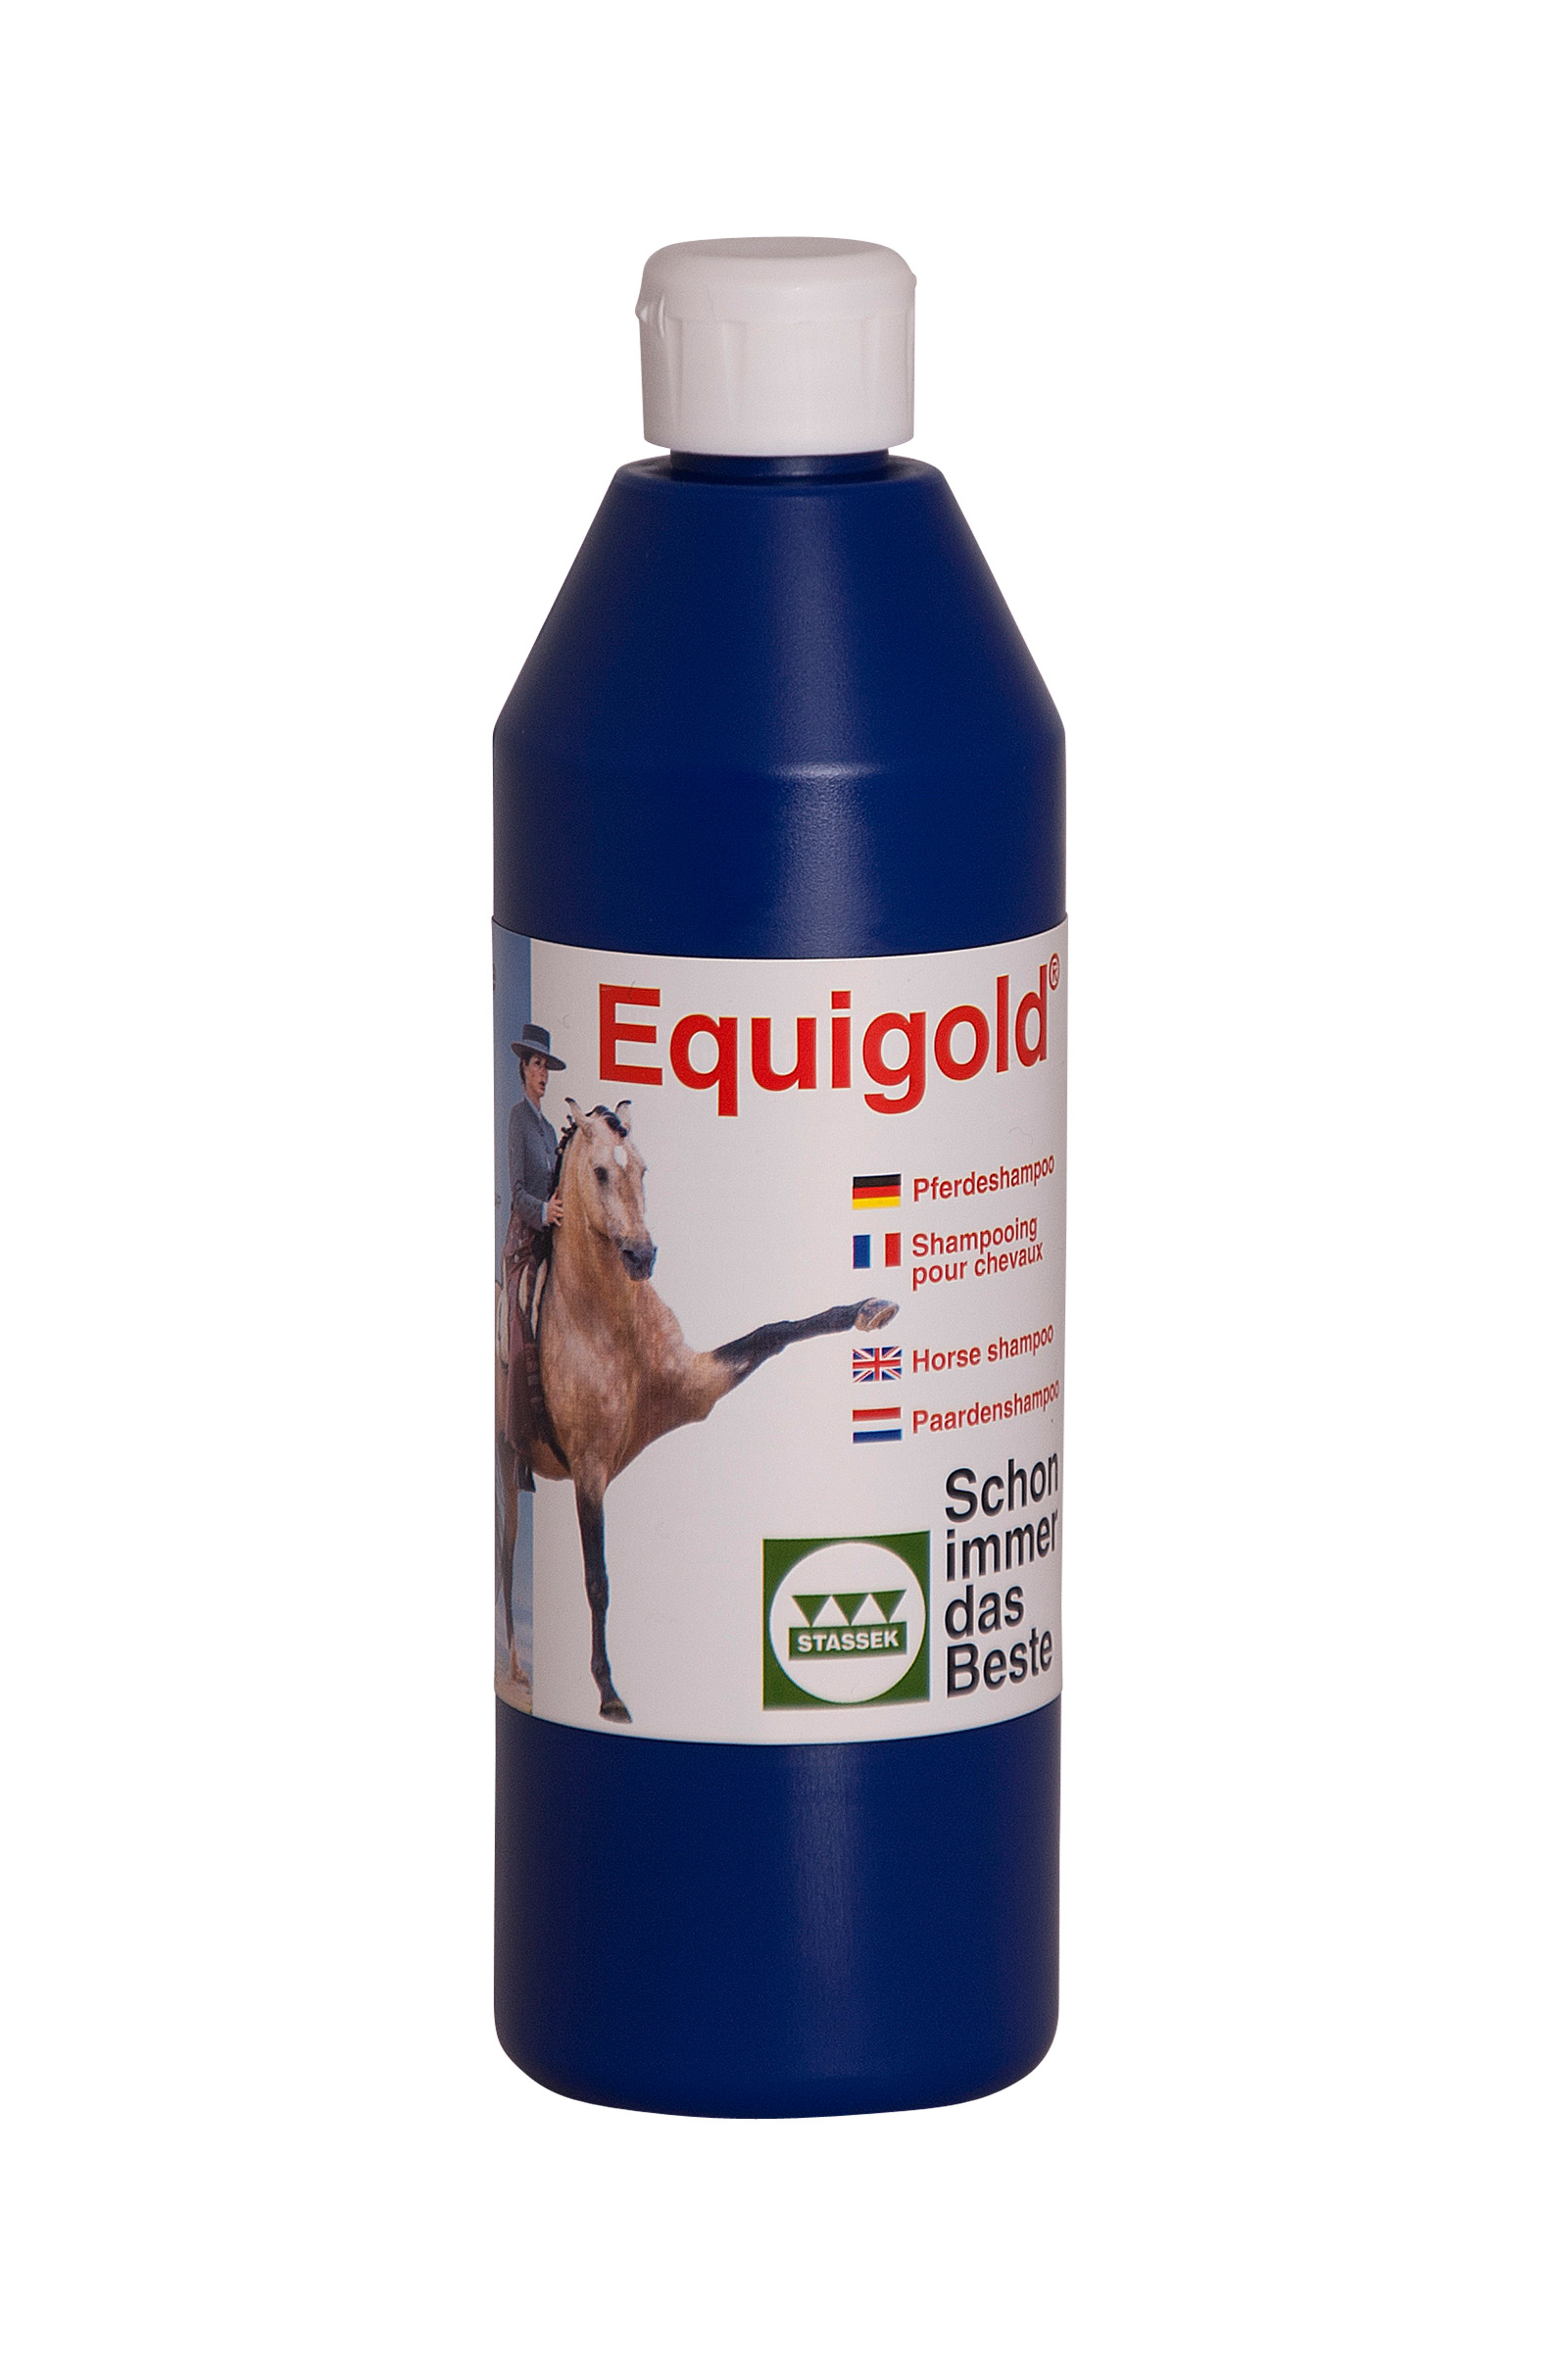 Acquista Stassek Equigold Shampoo per cavalli, 500 ml ora